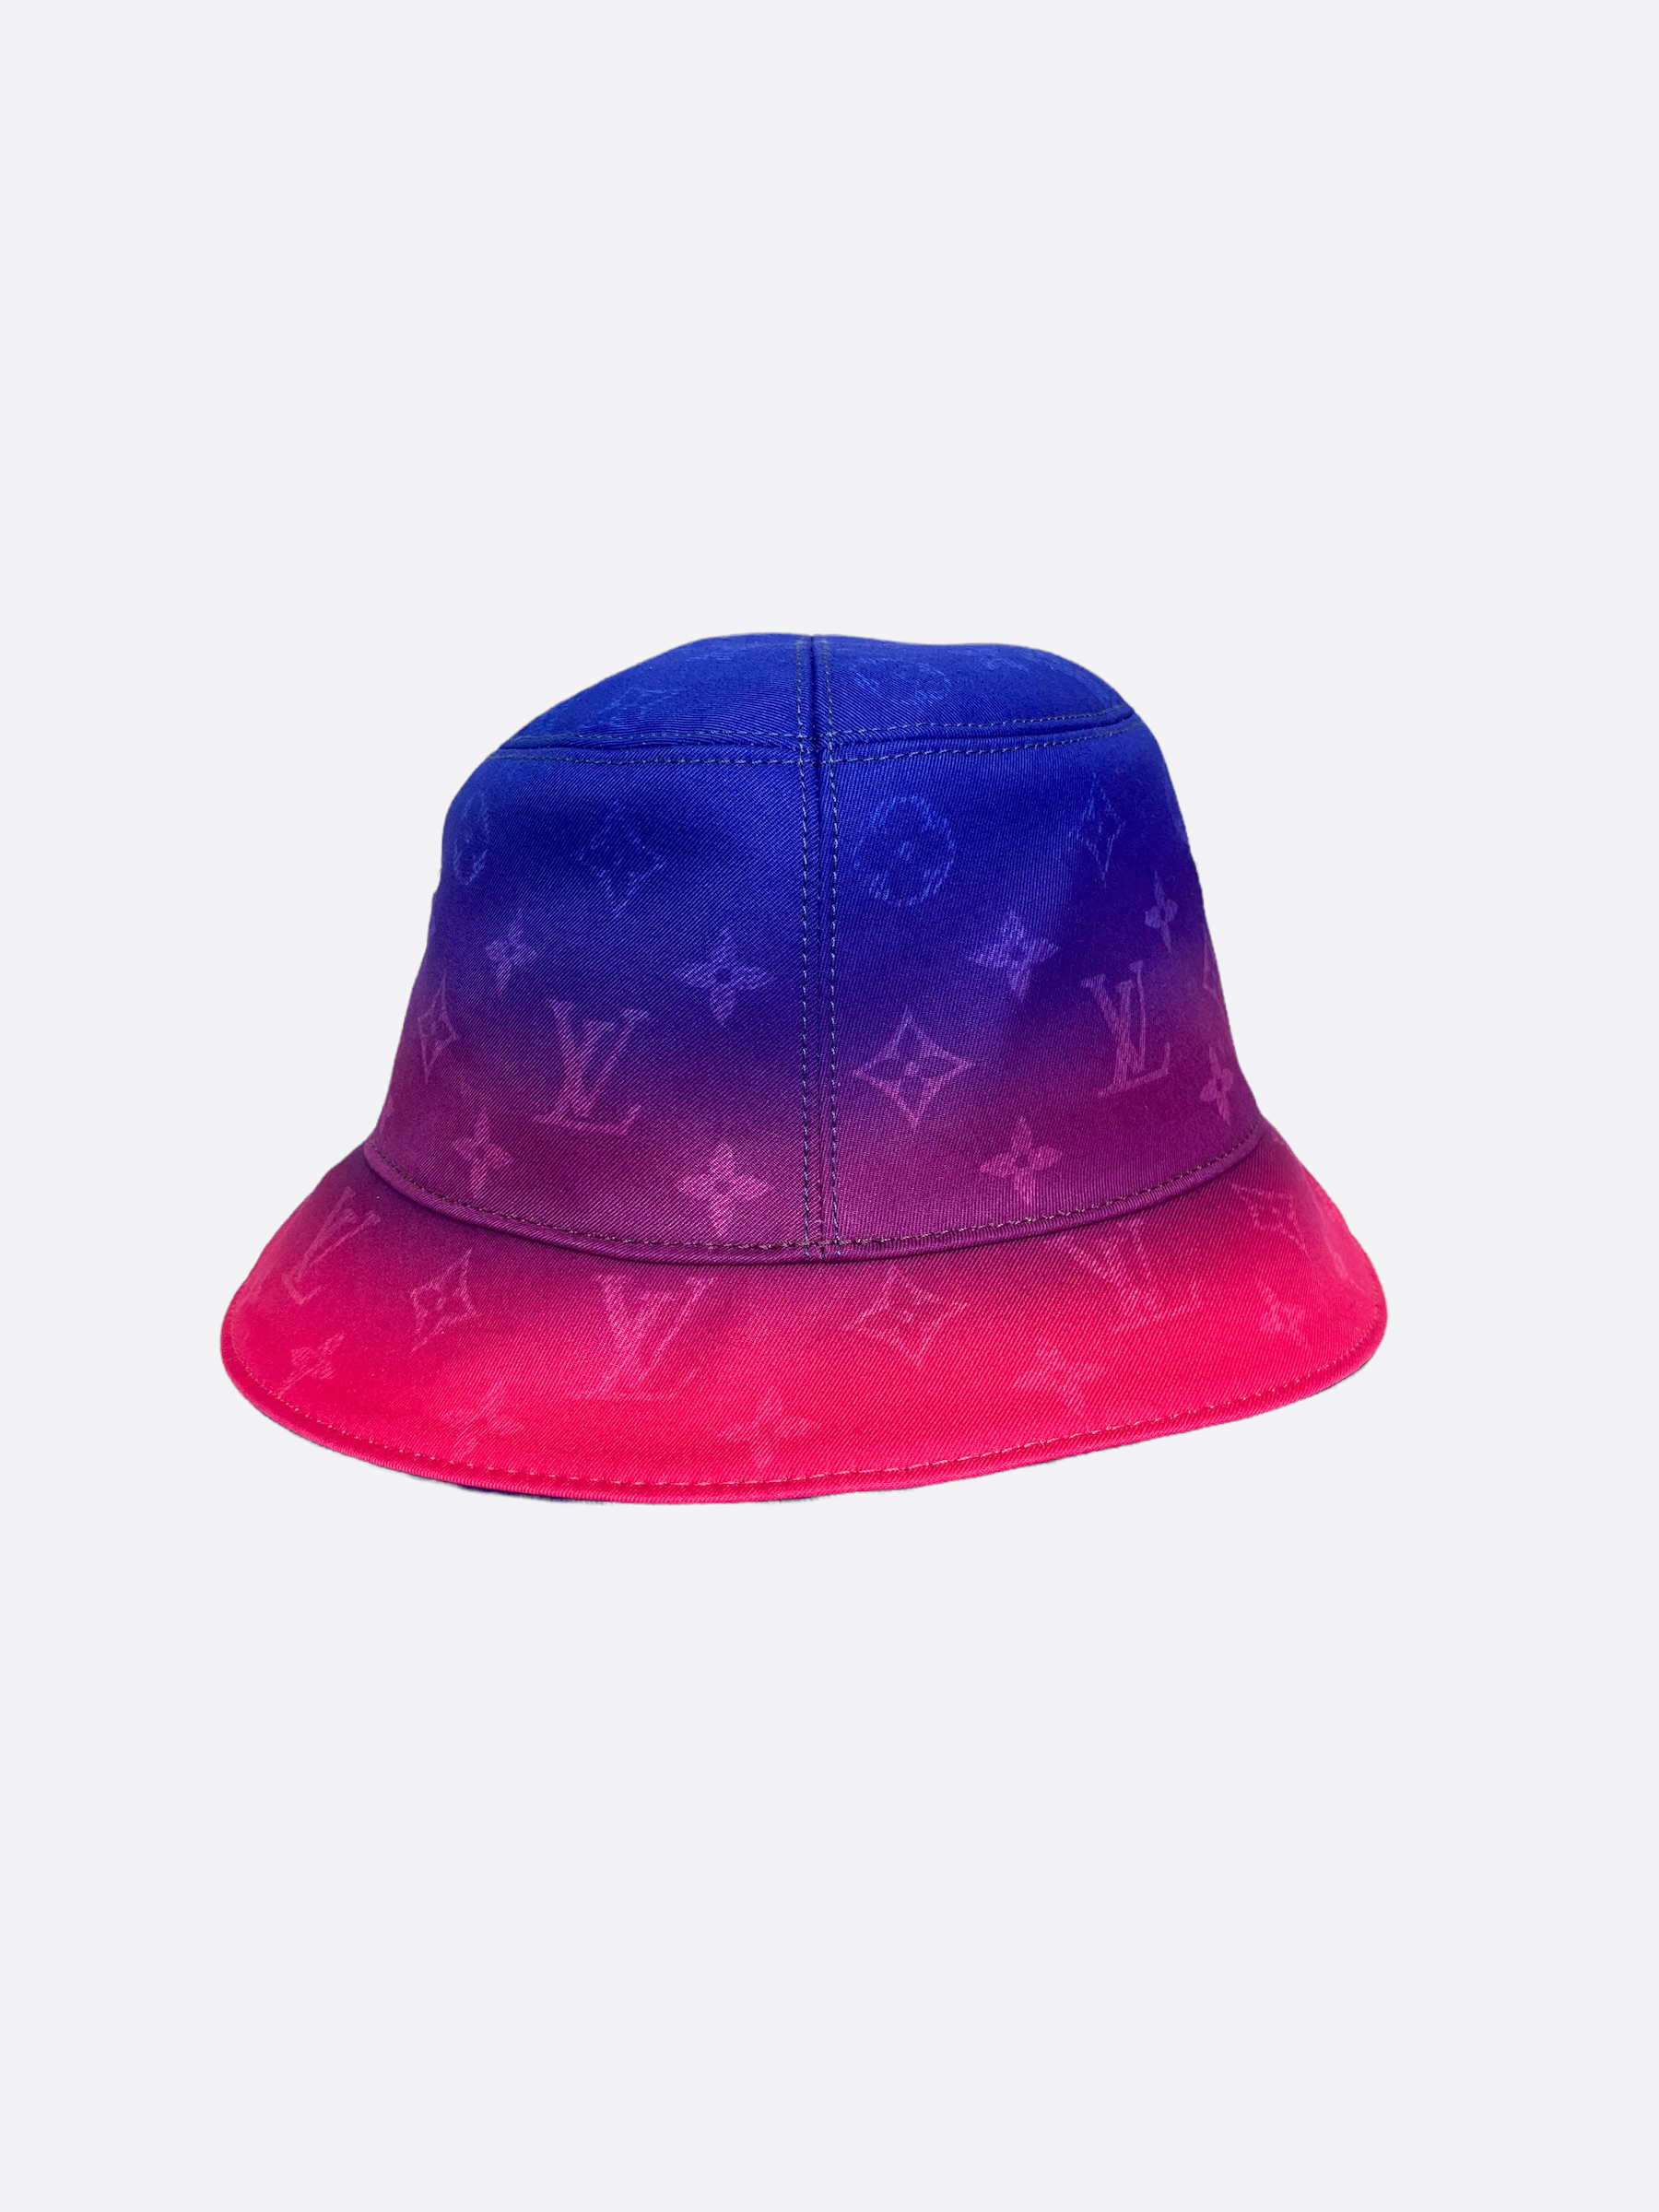 Louis Vuitton Bucket-Hat